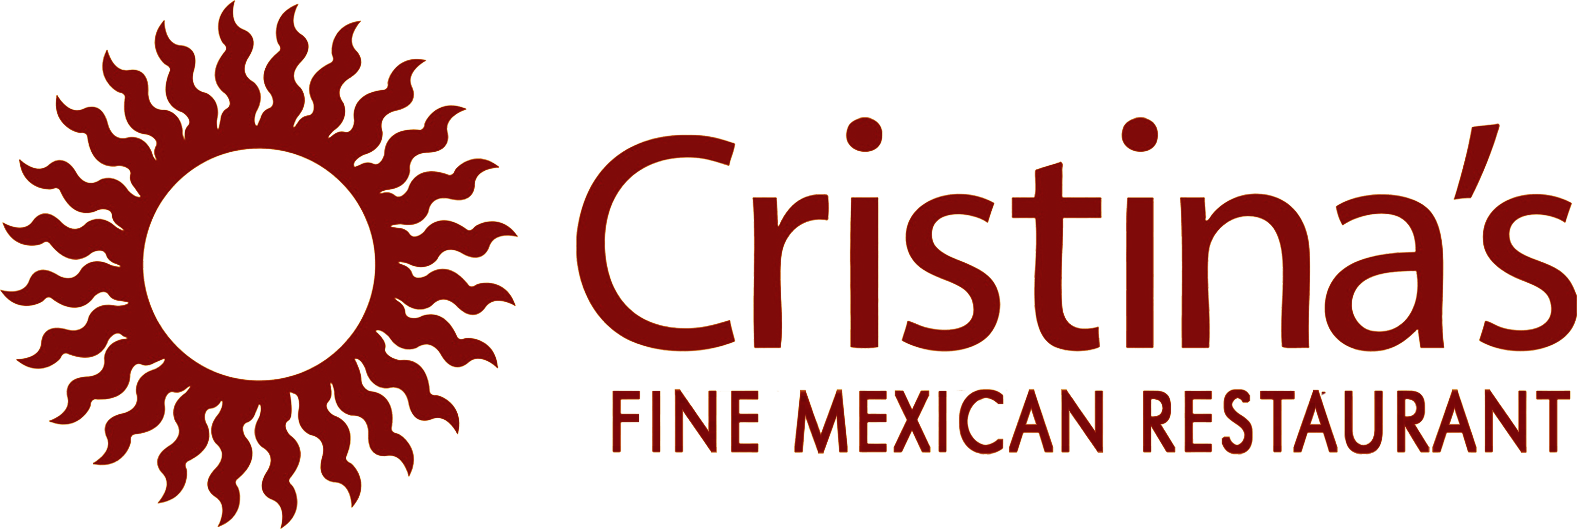 Mexi Logo - Dallas Mexican Food | Cristina's Fine Mexican Restaurant